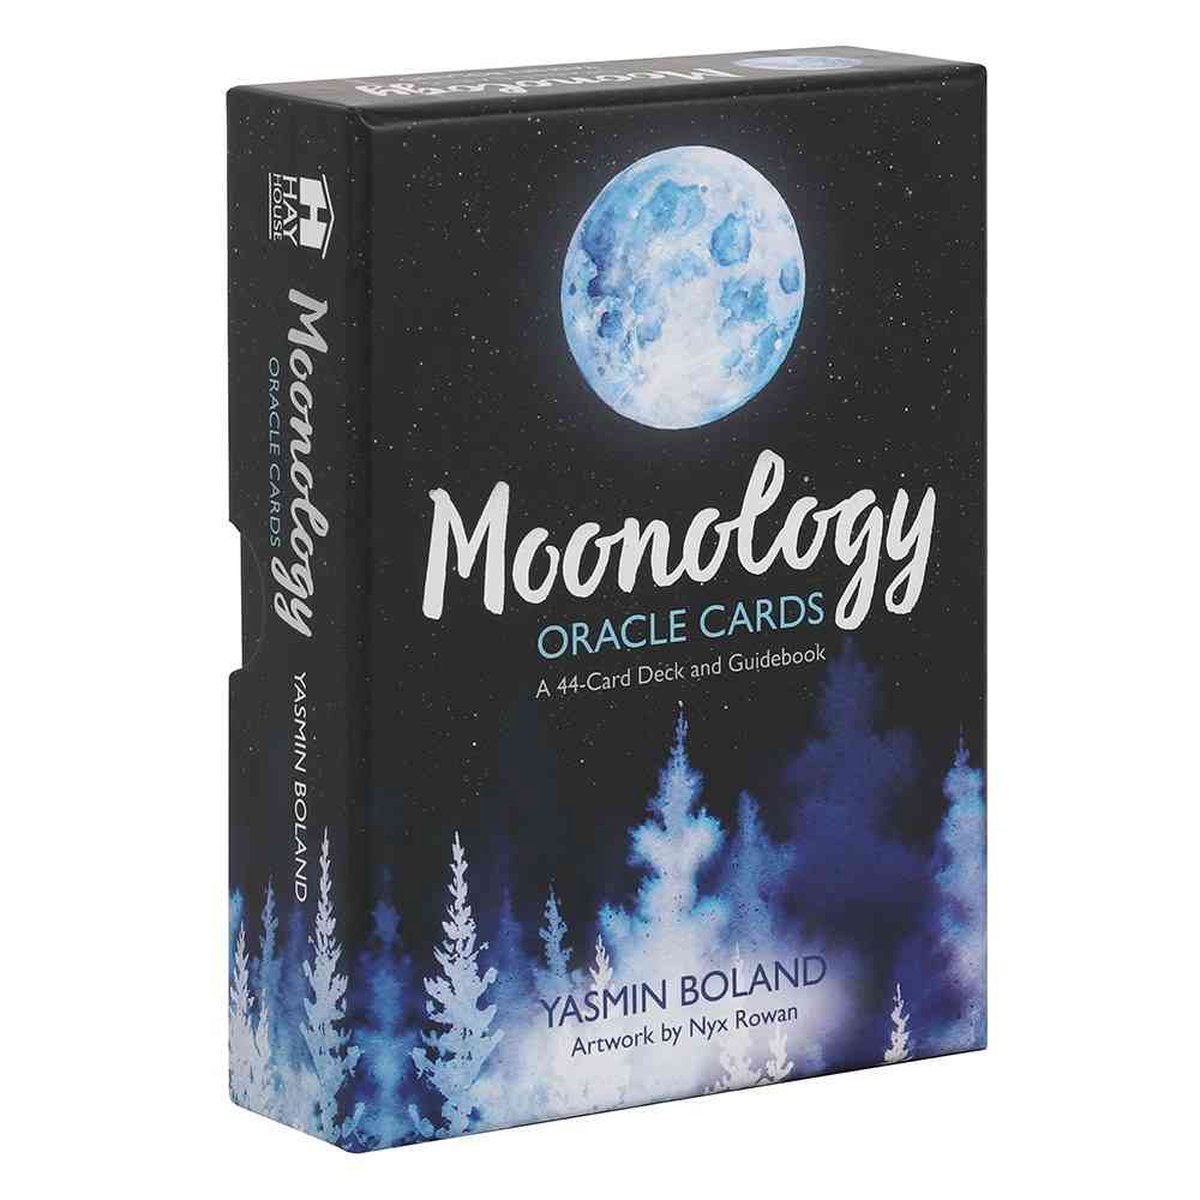 Moonology  Oracle Cards - Yasmin Boland